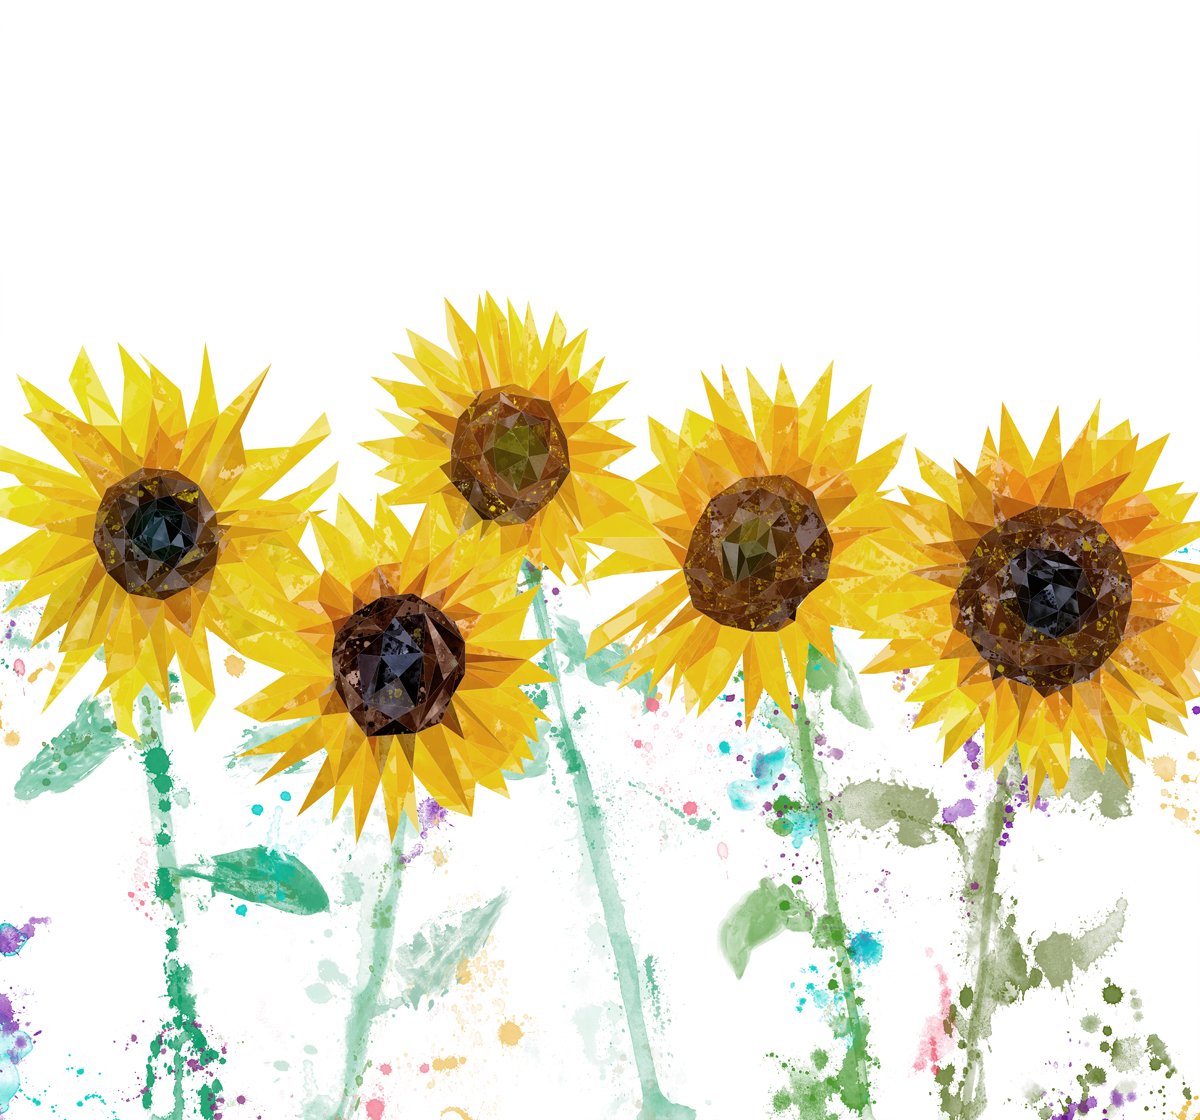 49+] Sunflower Desktop Wallpaper - WallpaperSafari